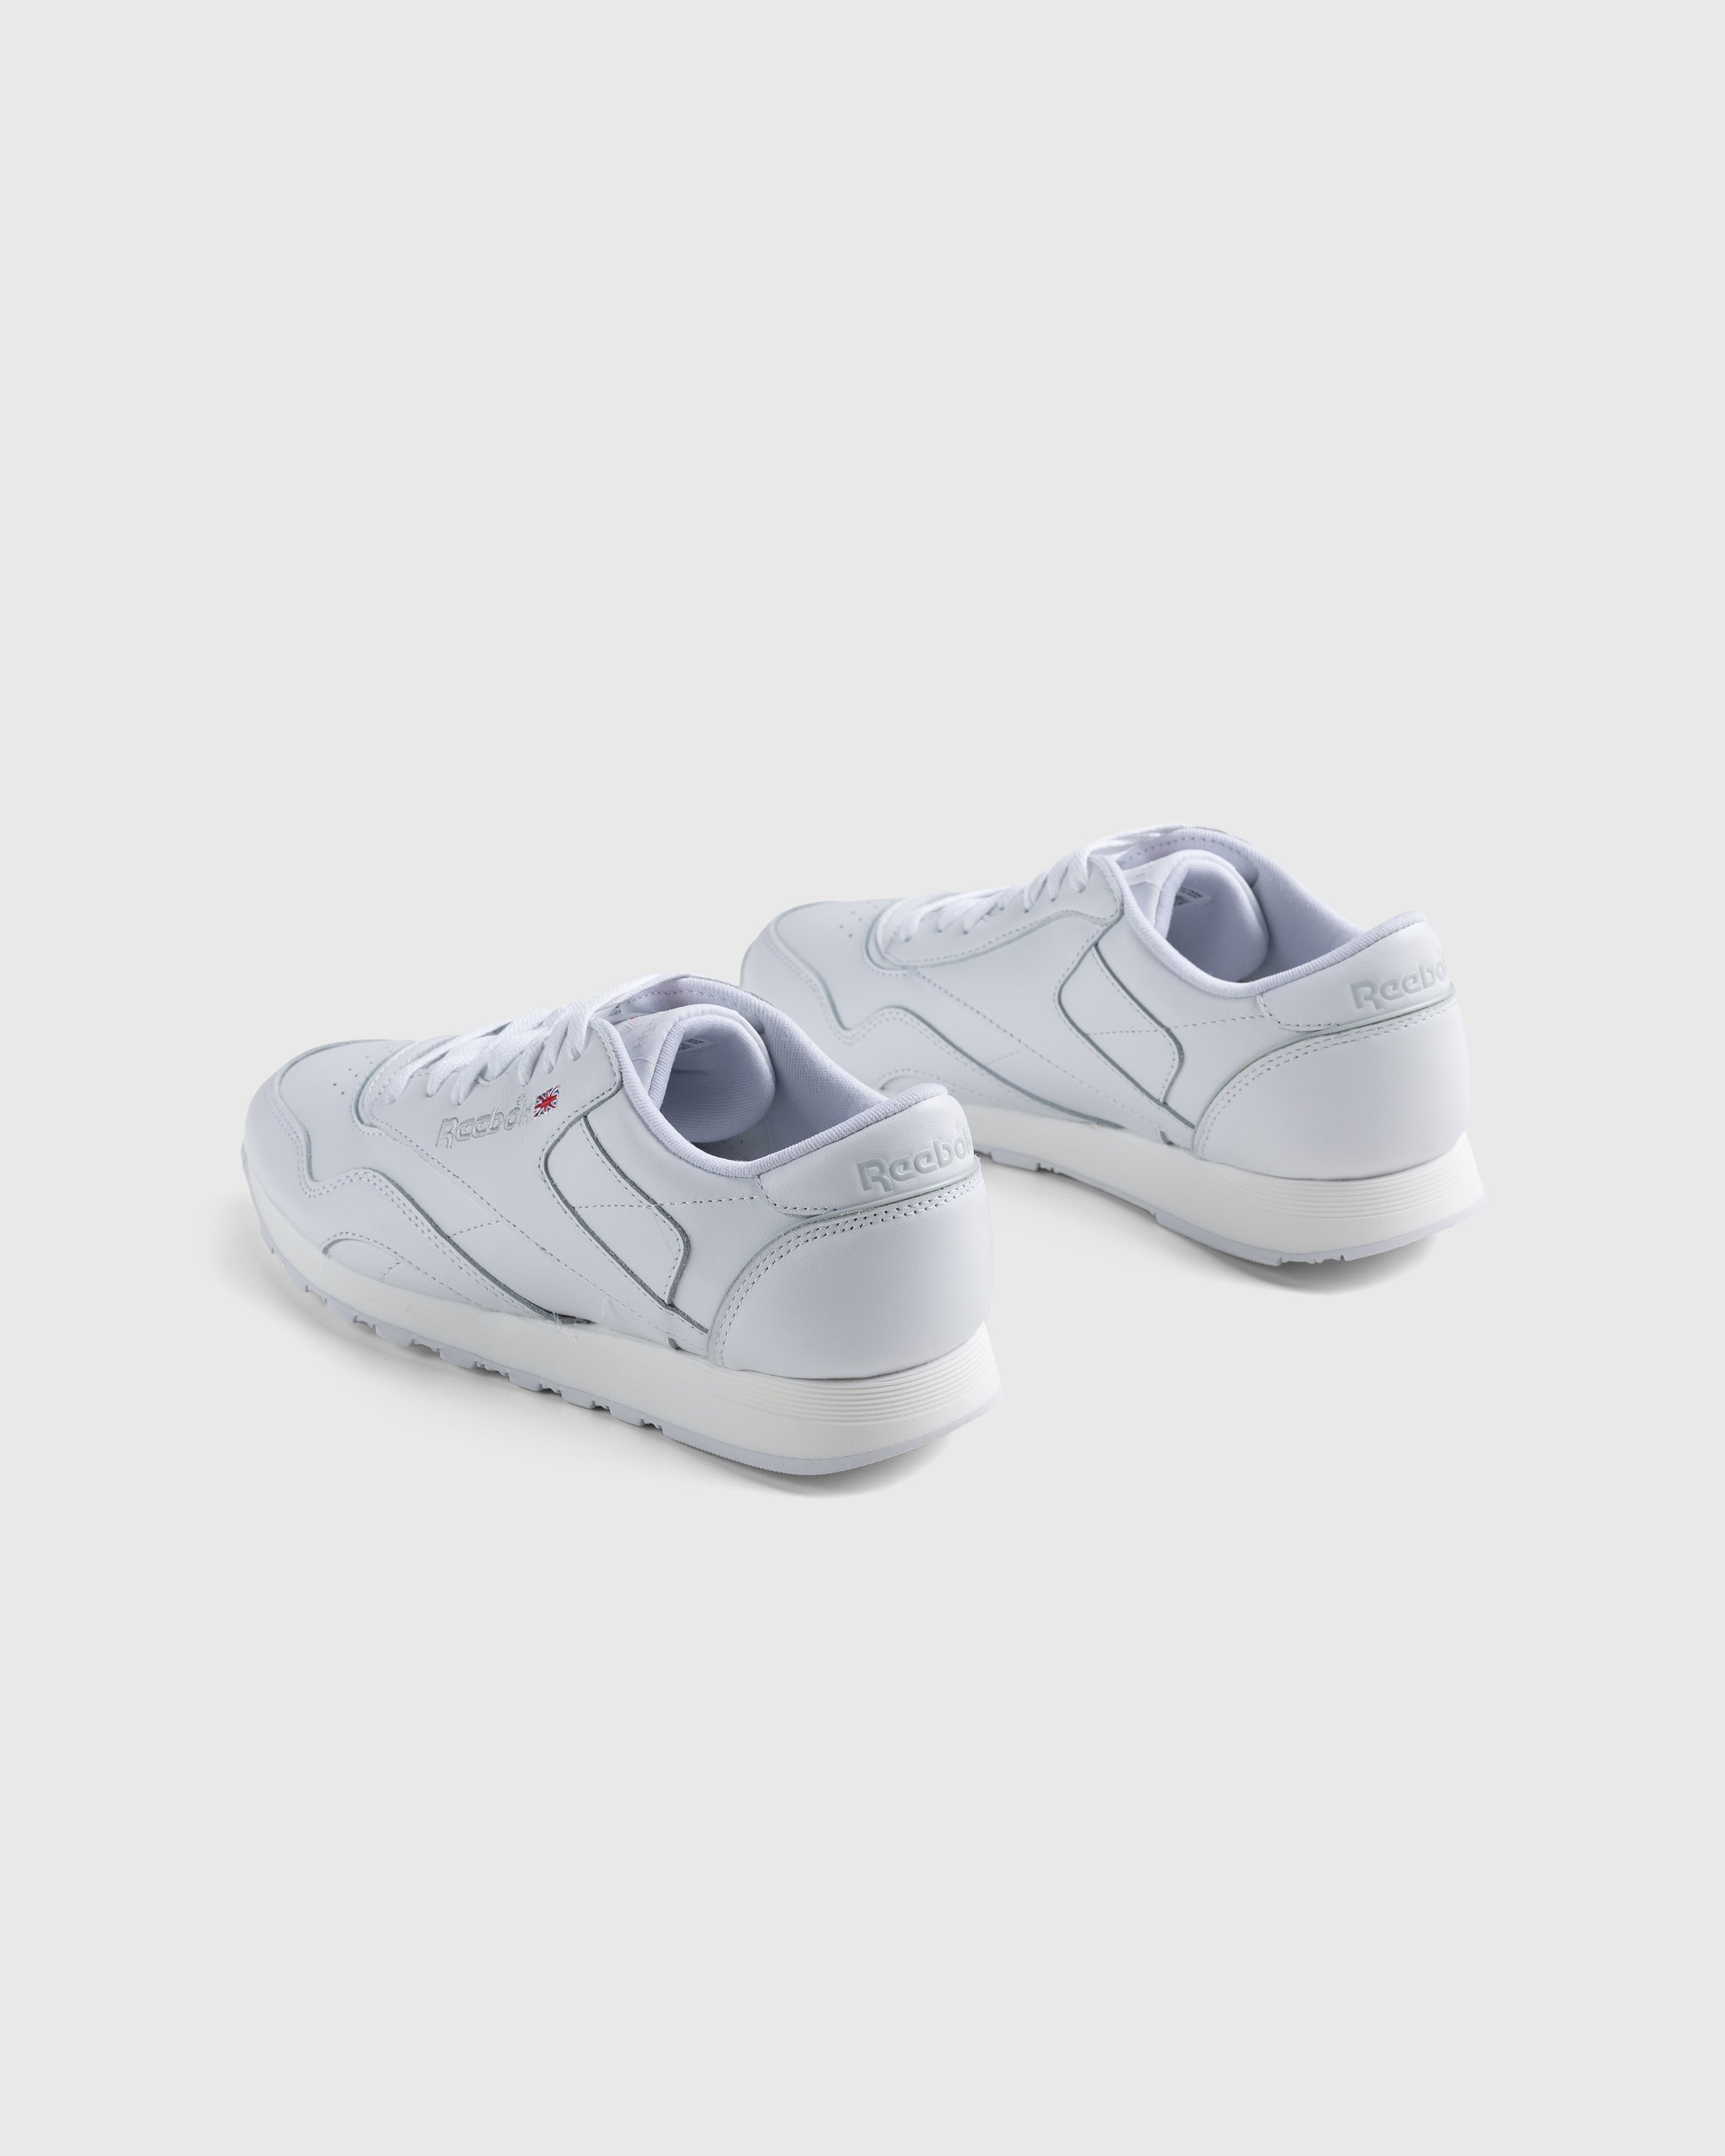 Reebok – Classic Leather Plus White - Sneakers - White - Image 3